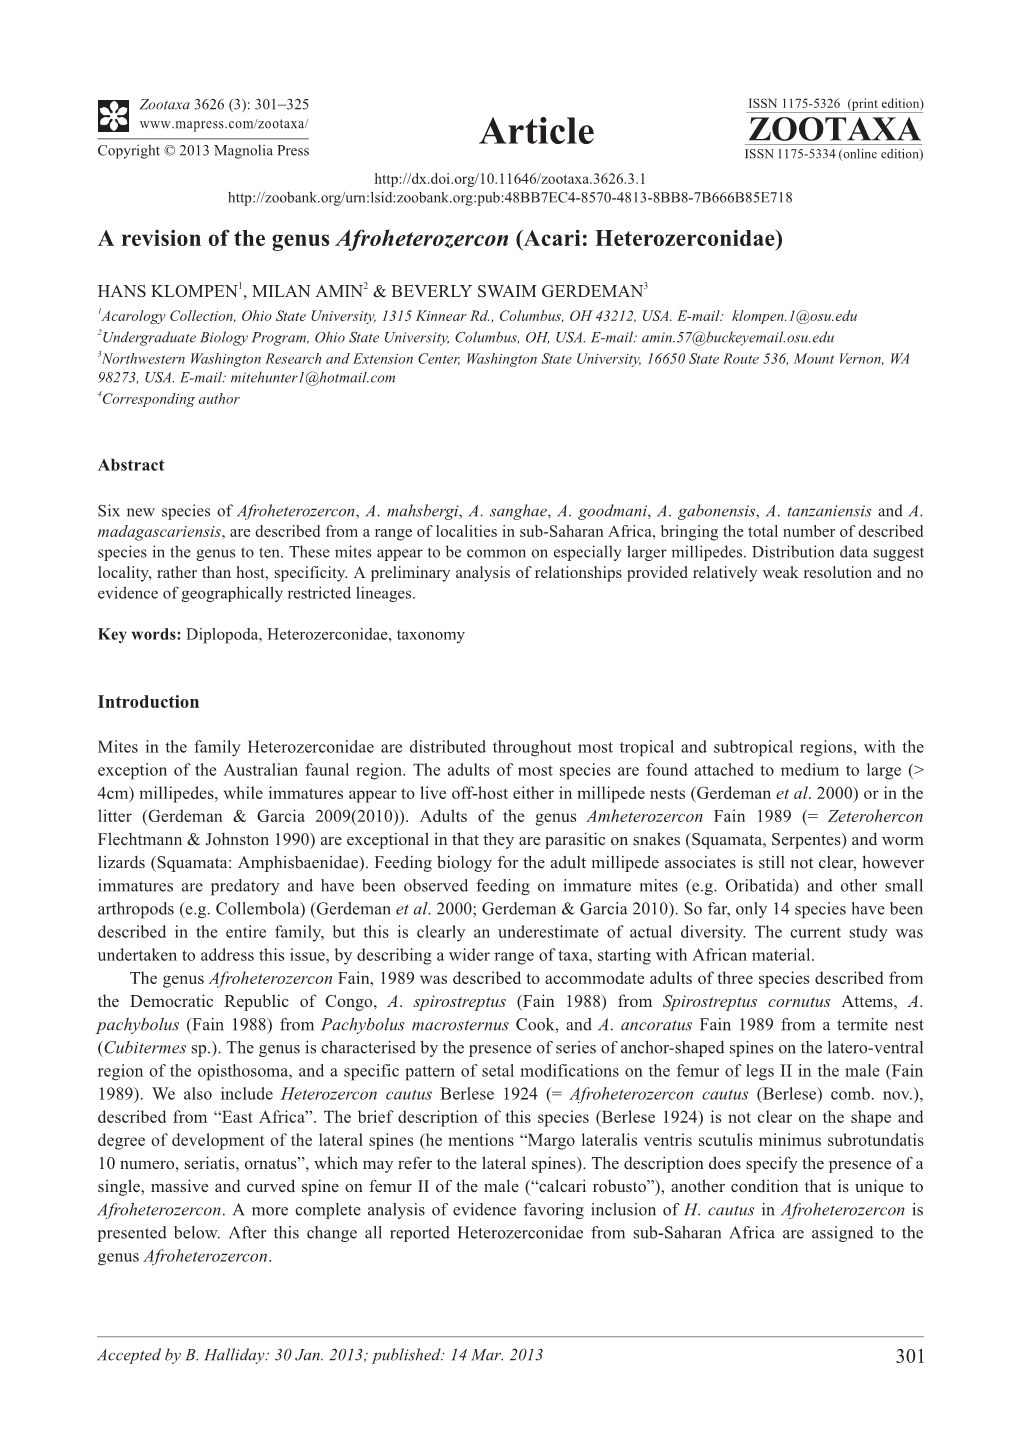 A Revision of the Genus Afroheterozercon (Acari: Heterozerconidae)